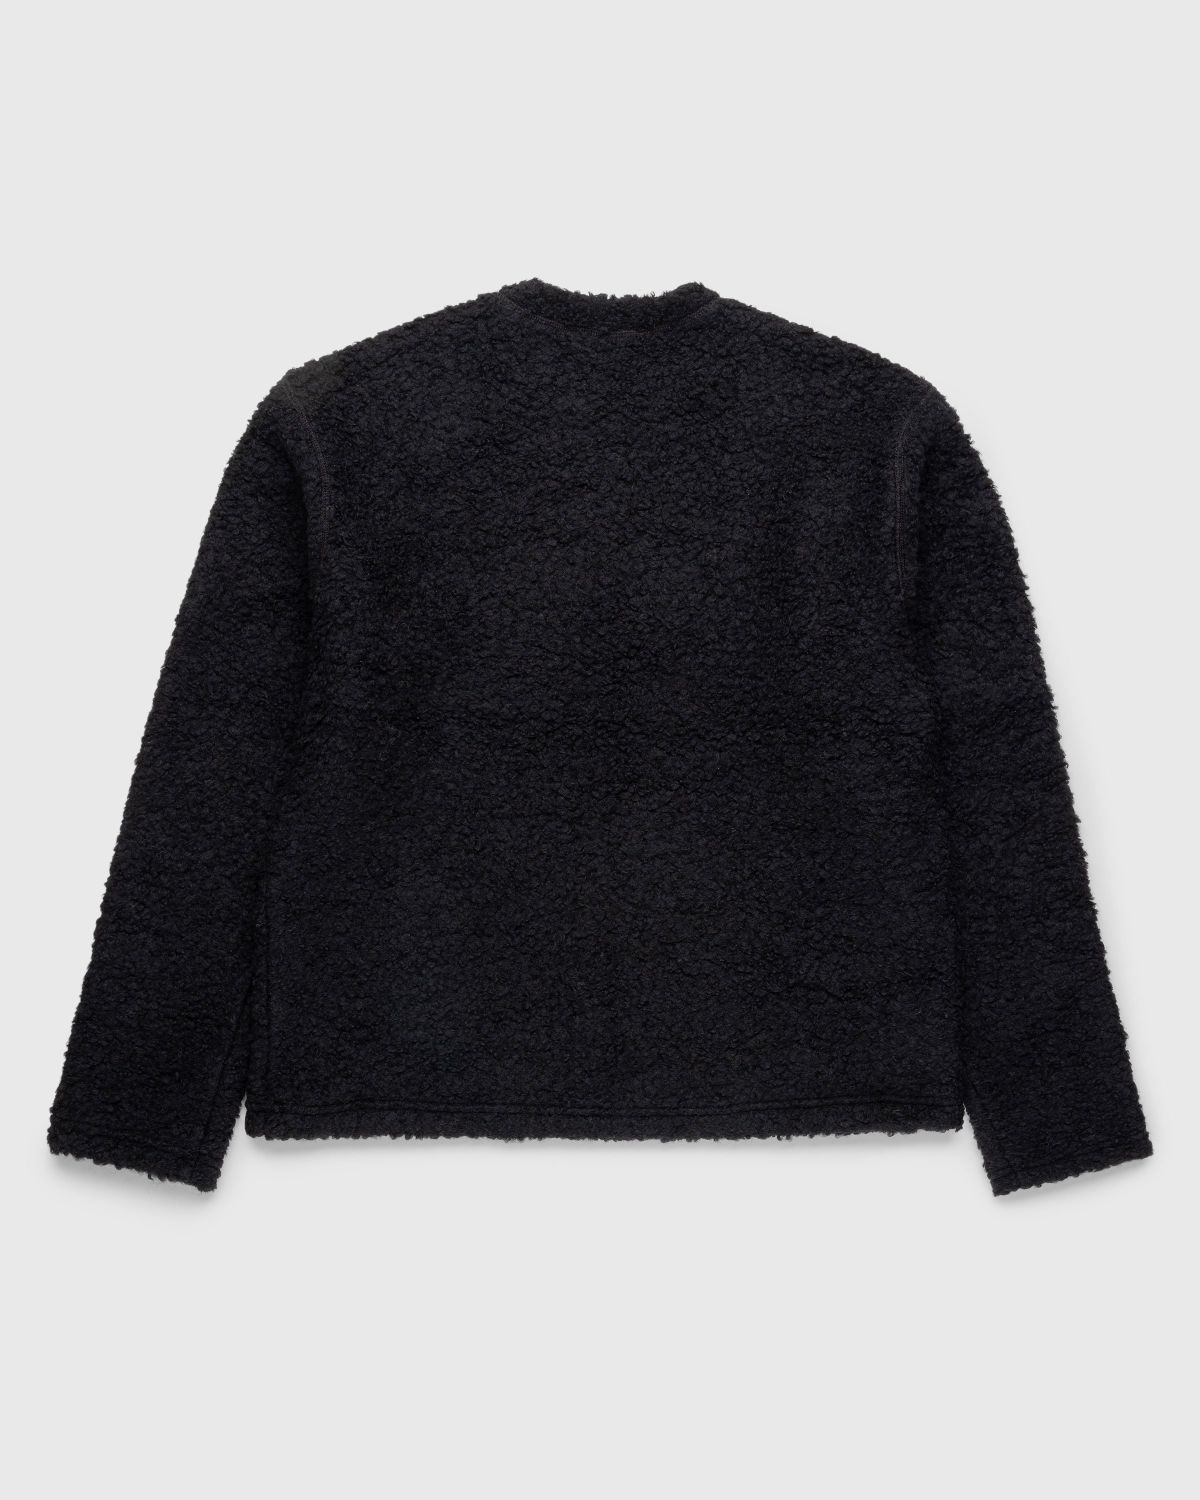 Highsnobiety HS05 – Wool Blend Inlaid Knit Crew Black - Crewnecks - Black - Image 2